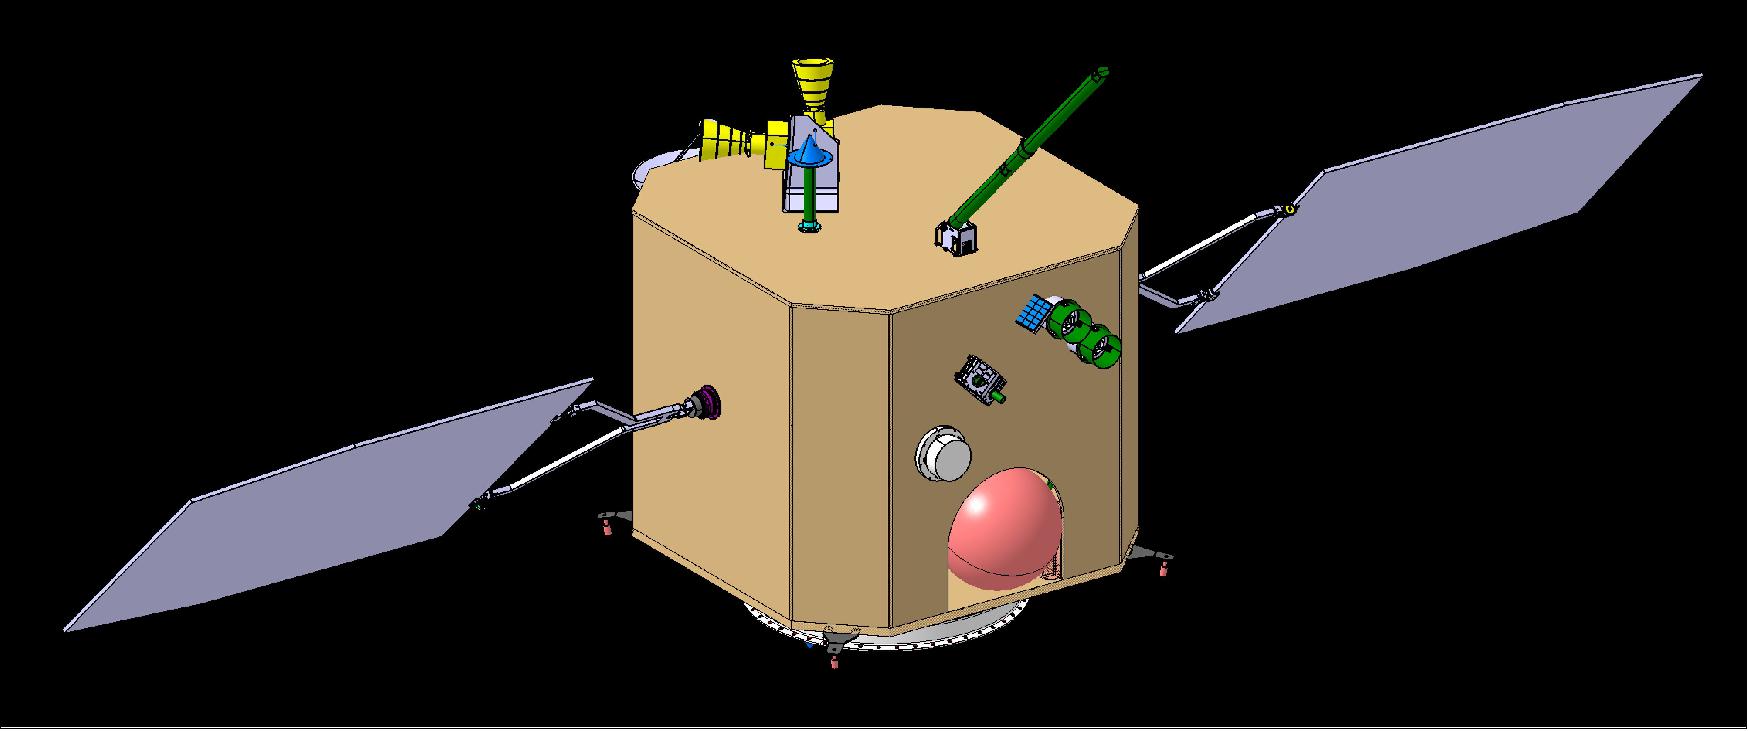 Figure 3: Illustration of the KPLO spacecraft provided by KARI (image credit: KARI)